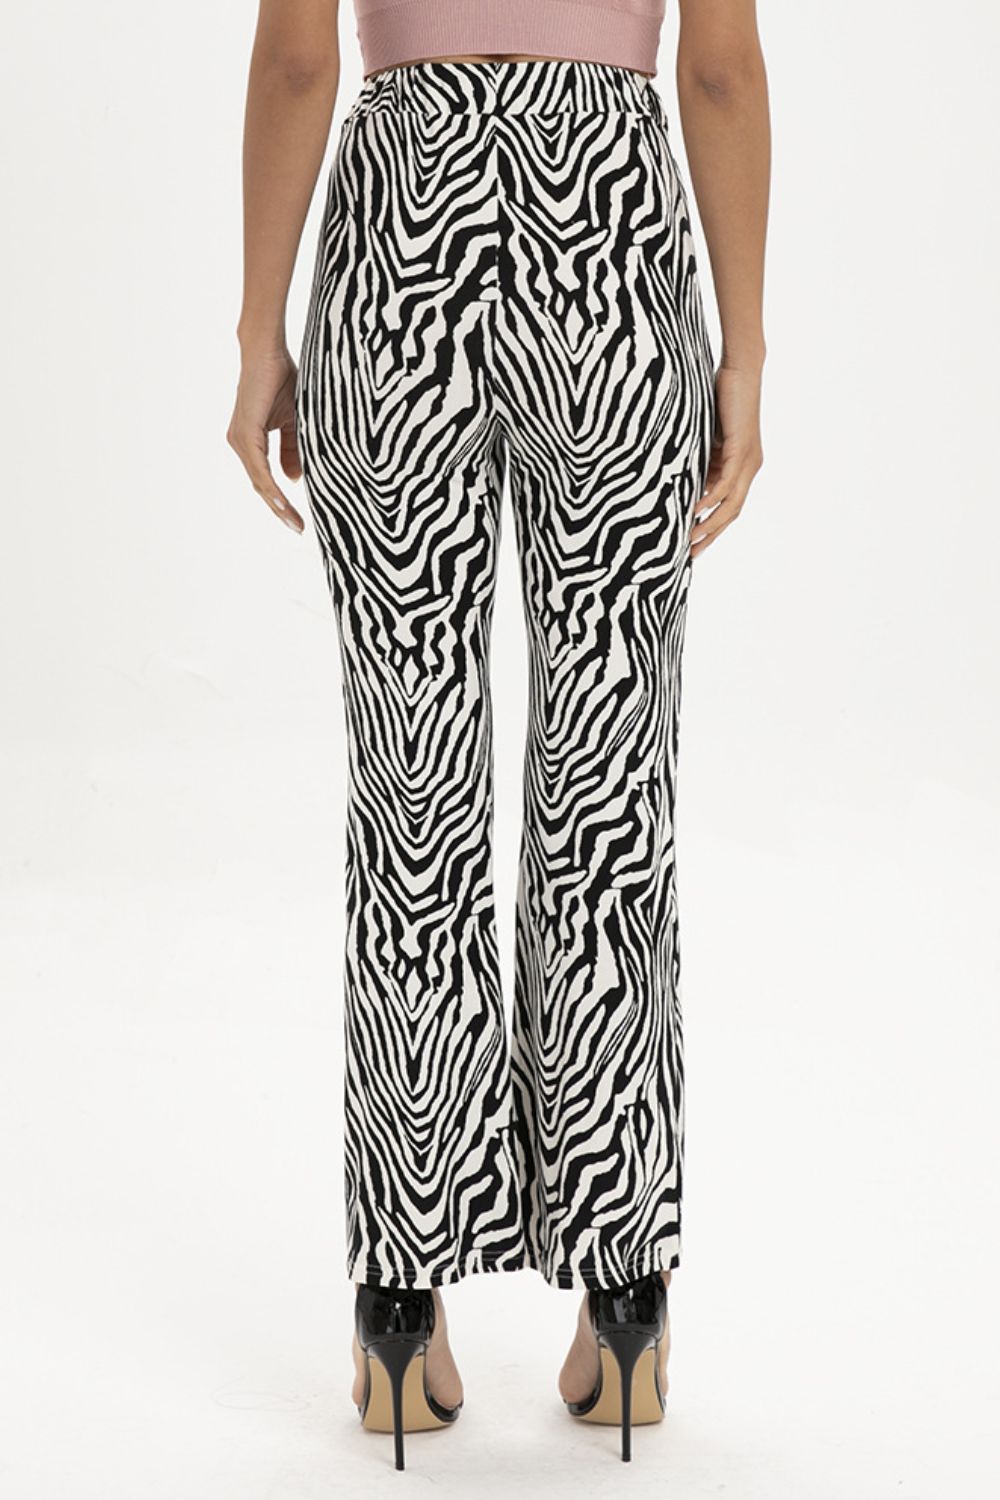 - Zebra Print Straight Leg Pants - womens pants at TFC&H Co.